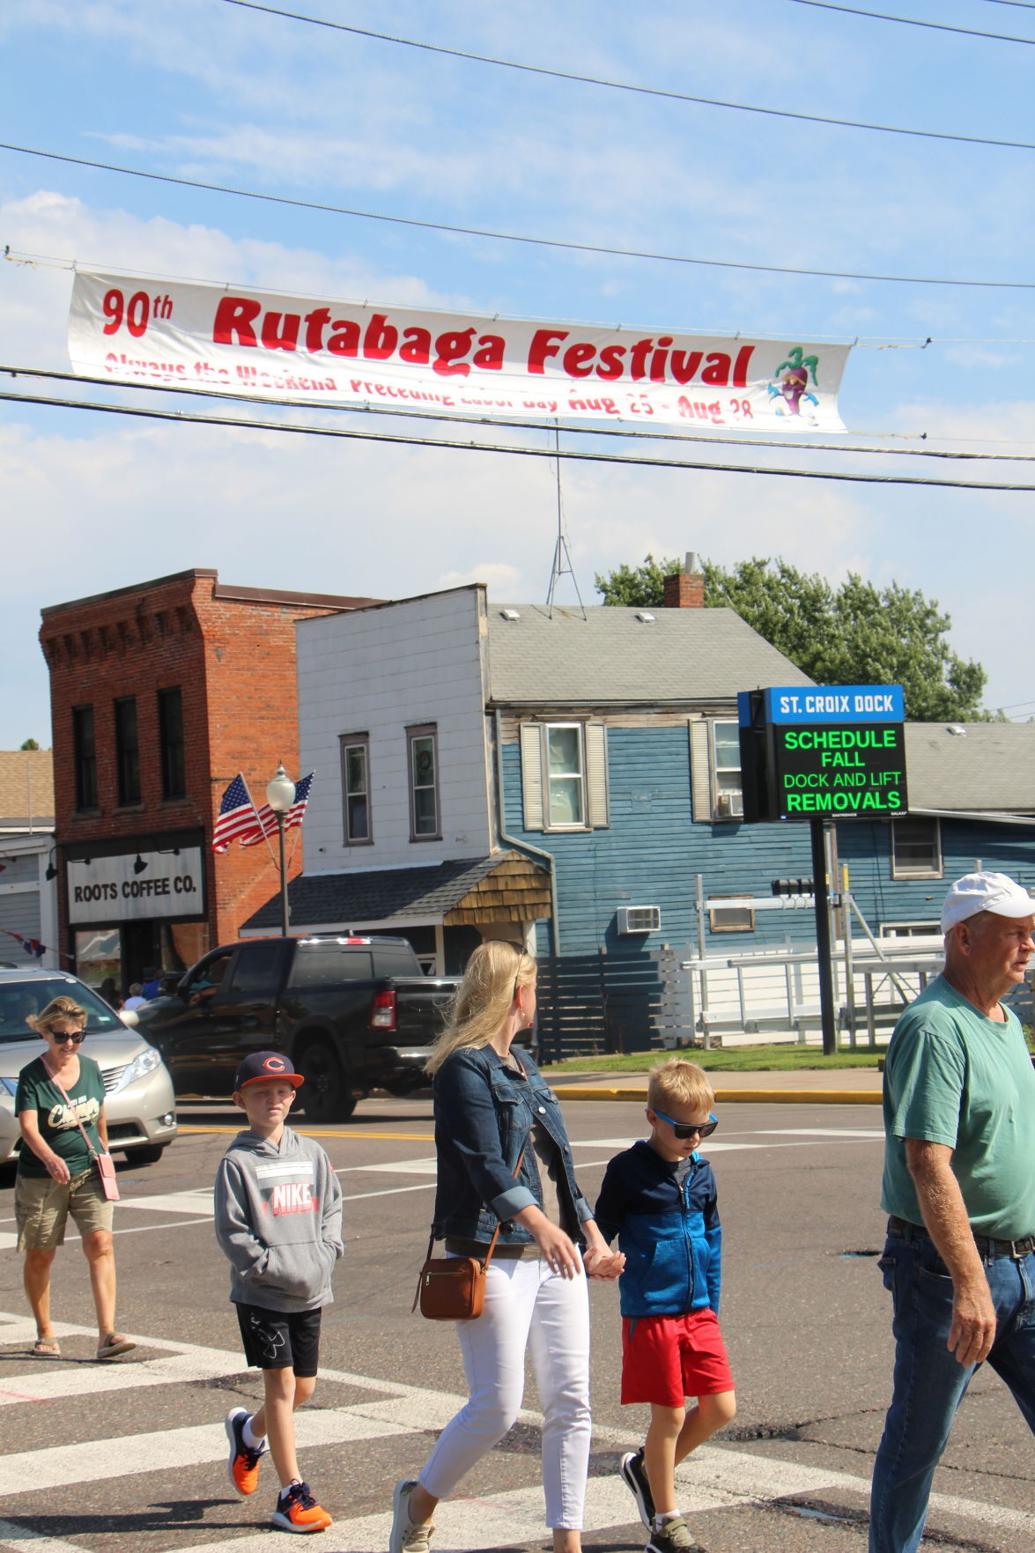 Scenes from Cumberland's 90th Rutabaga Fest Photos